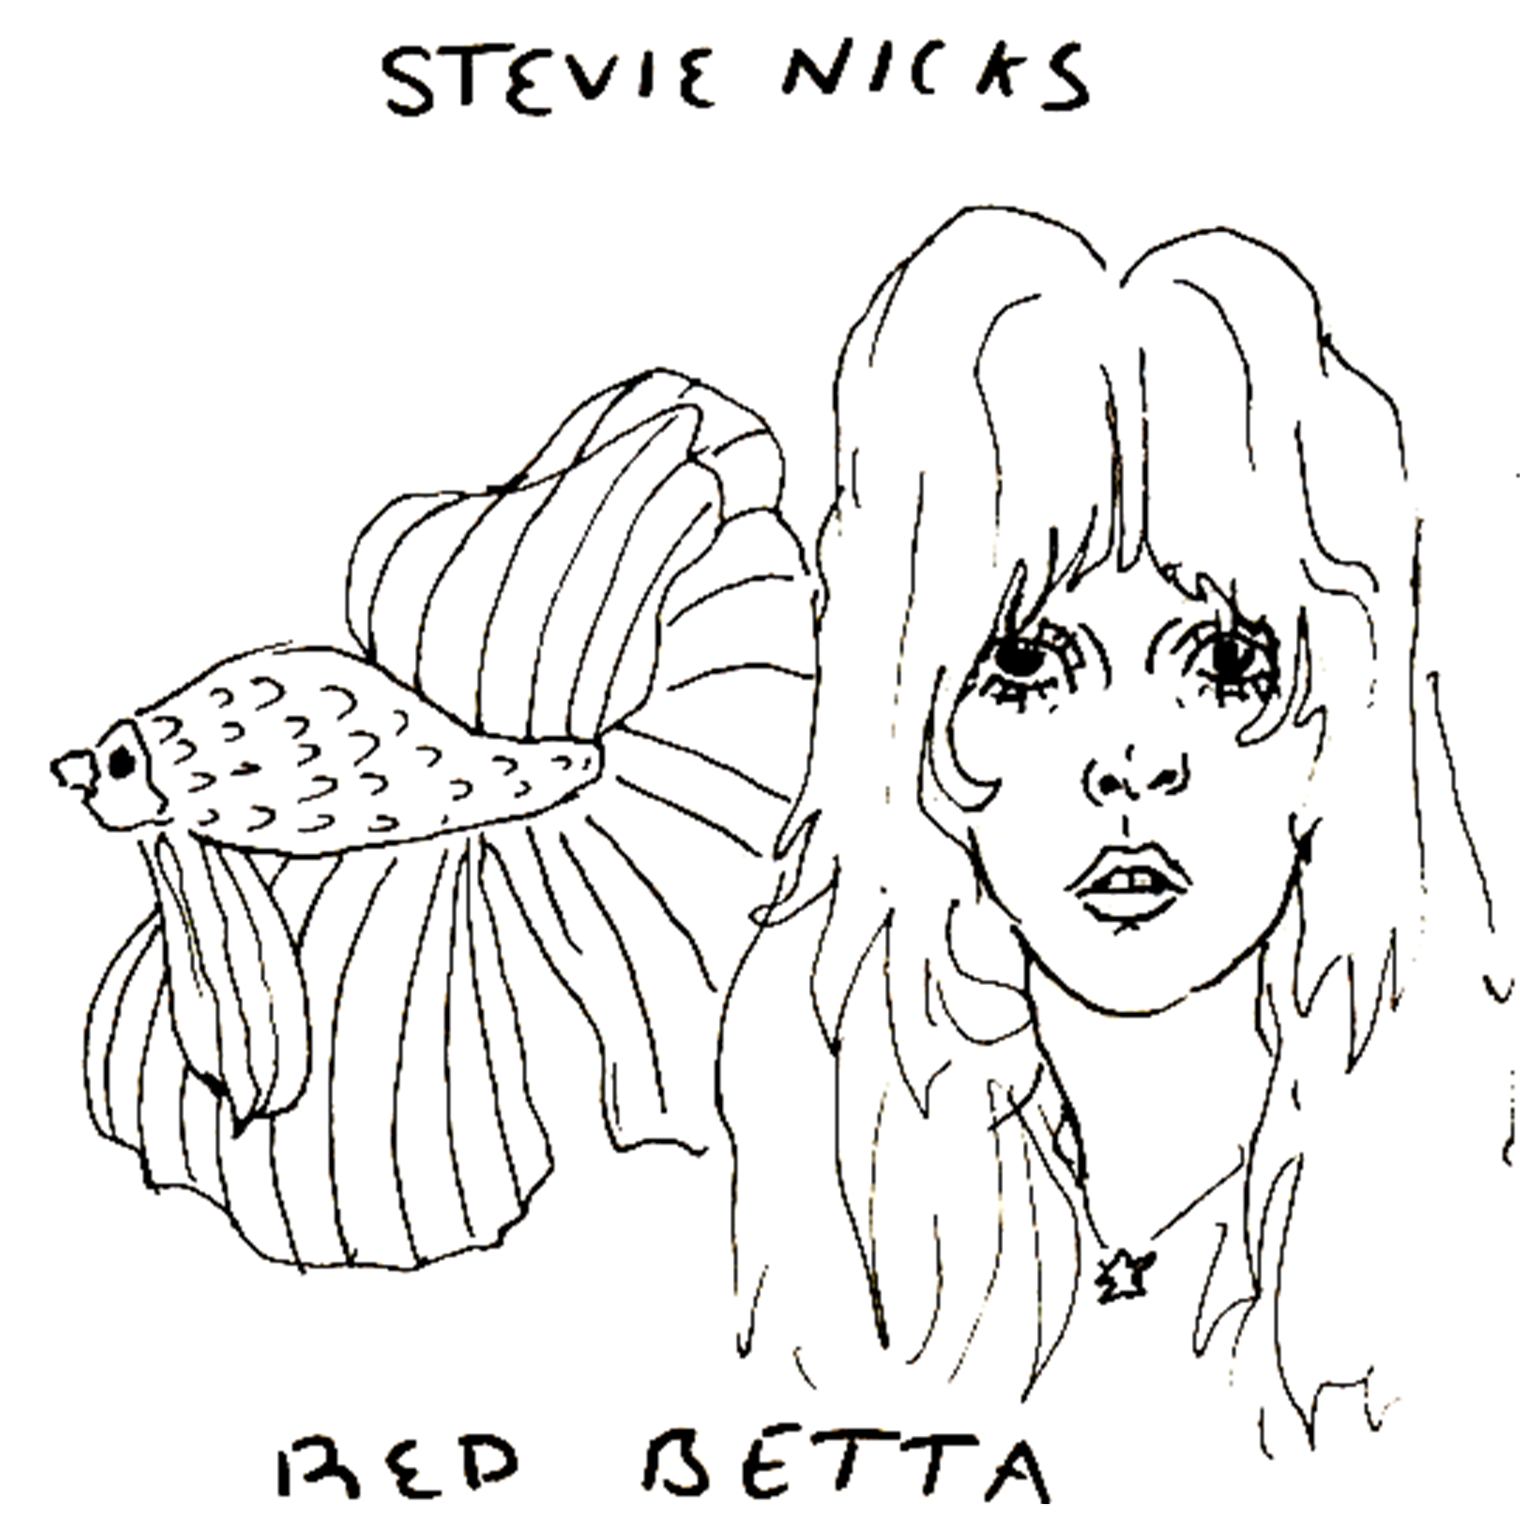 red fish as frontmen comic -Stevie Nicks.png